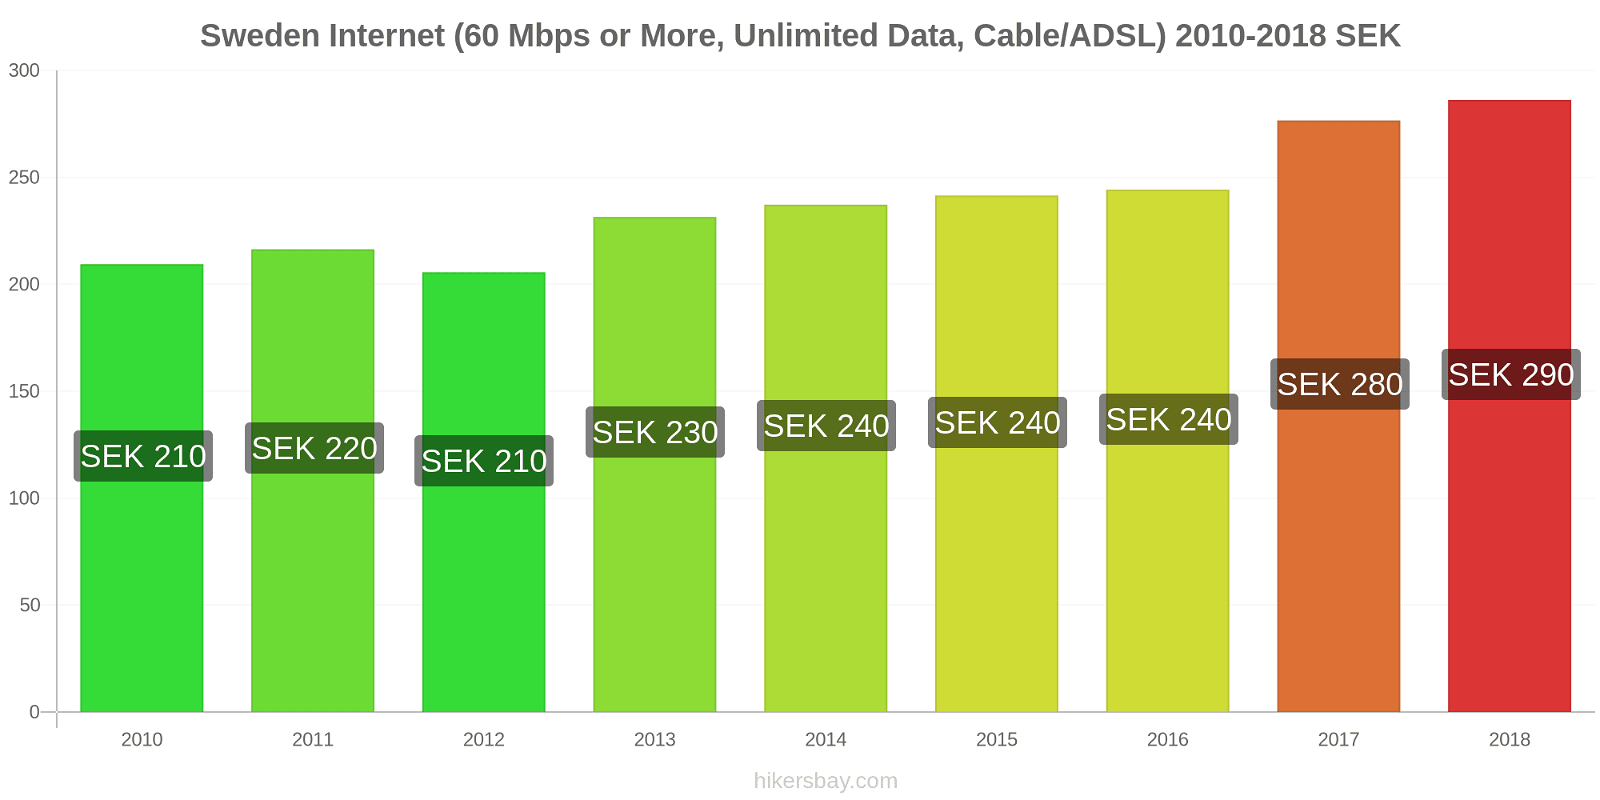 Sweden price changes Internet (60 Mbps or more, unlimited data, cable/ADSL) hikersbay.com